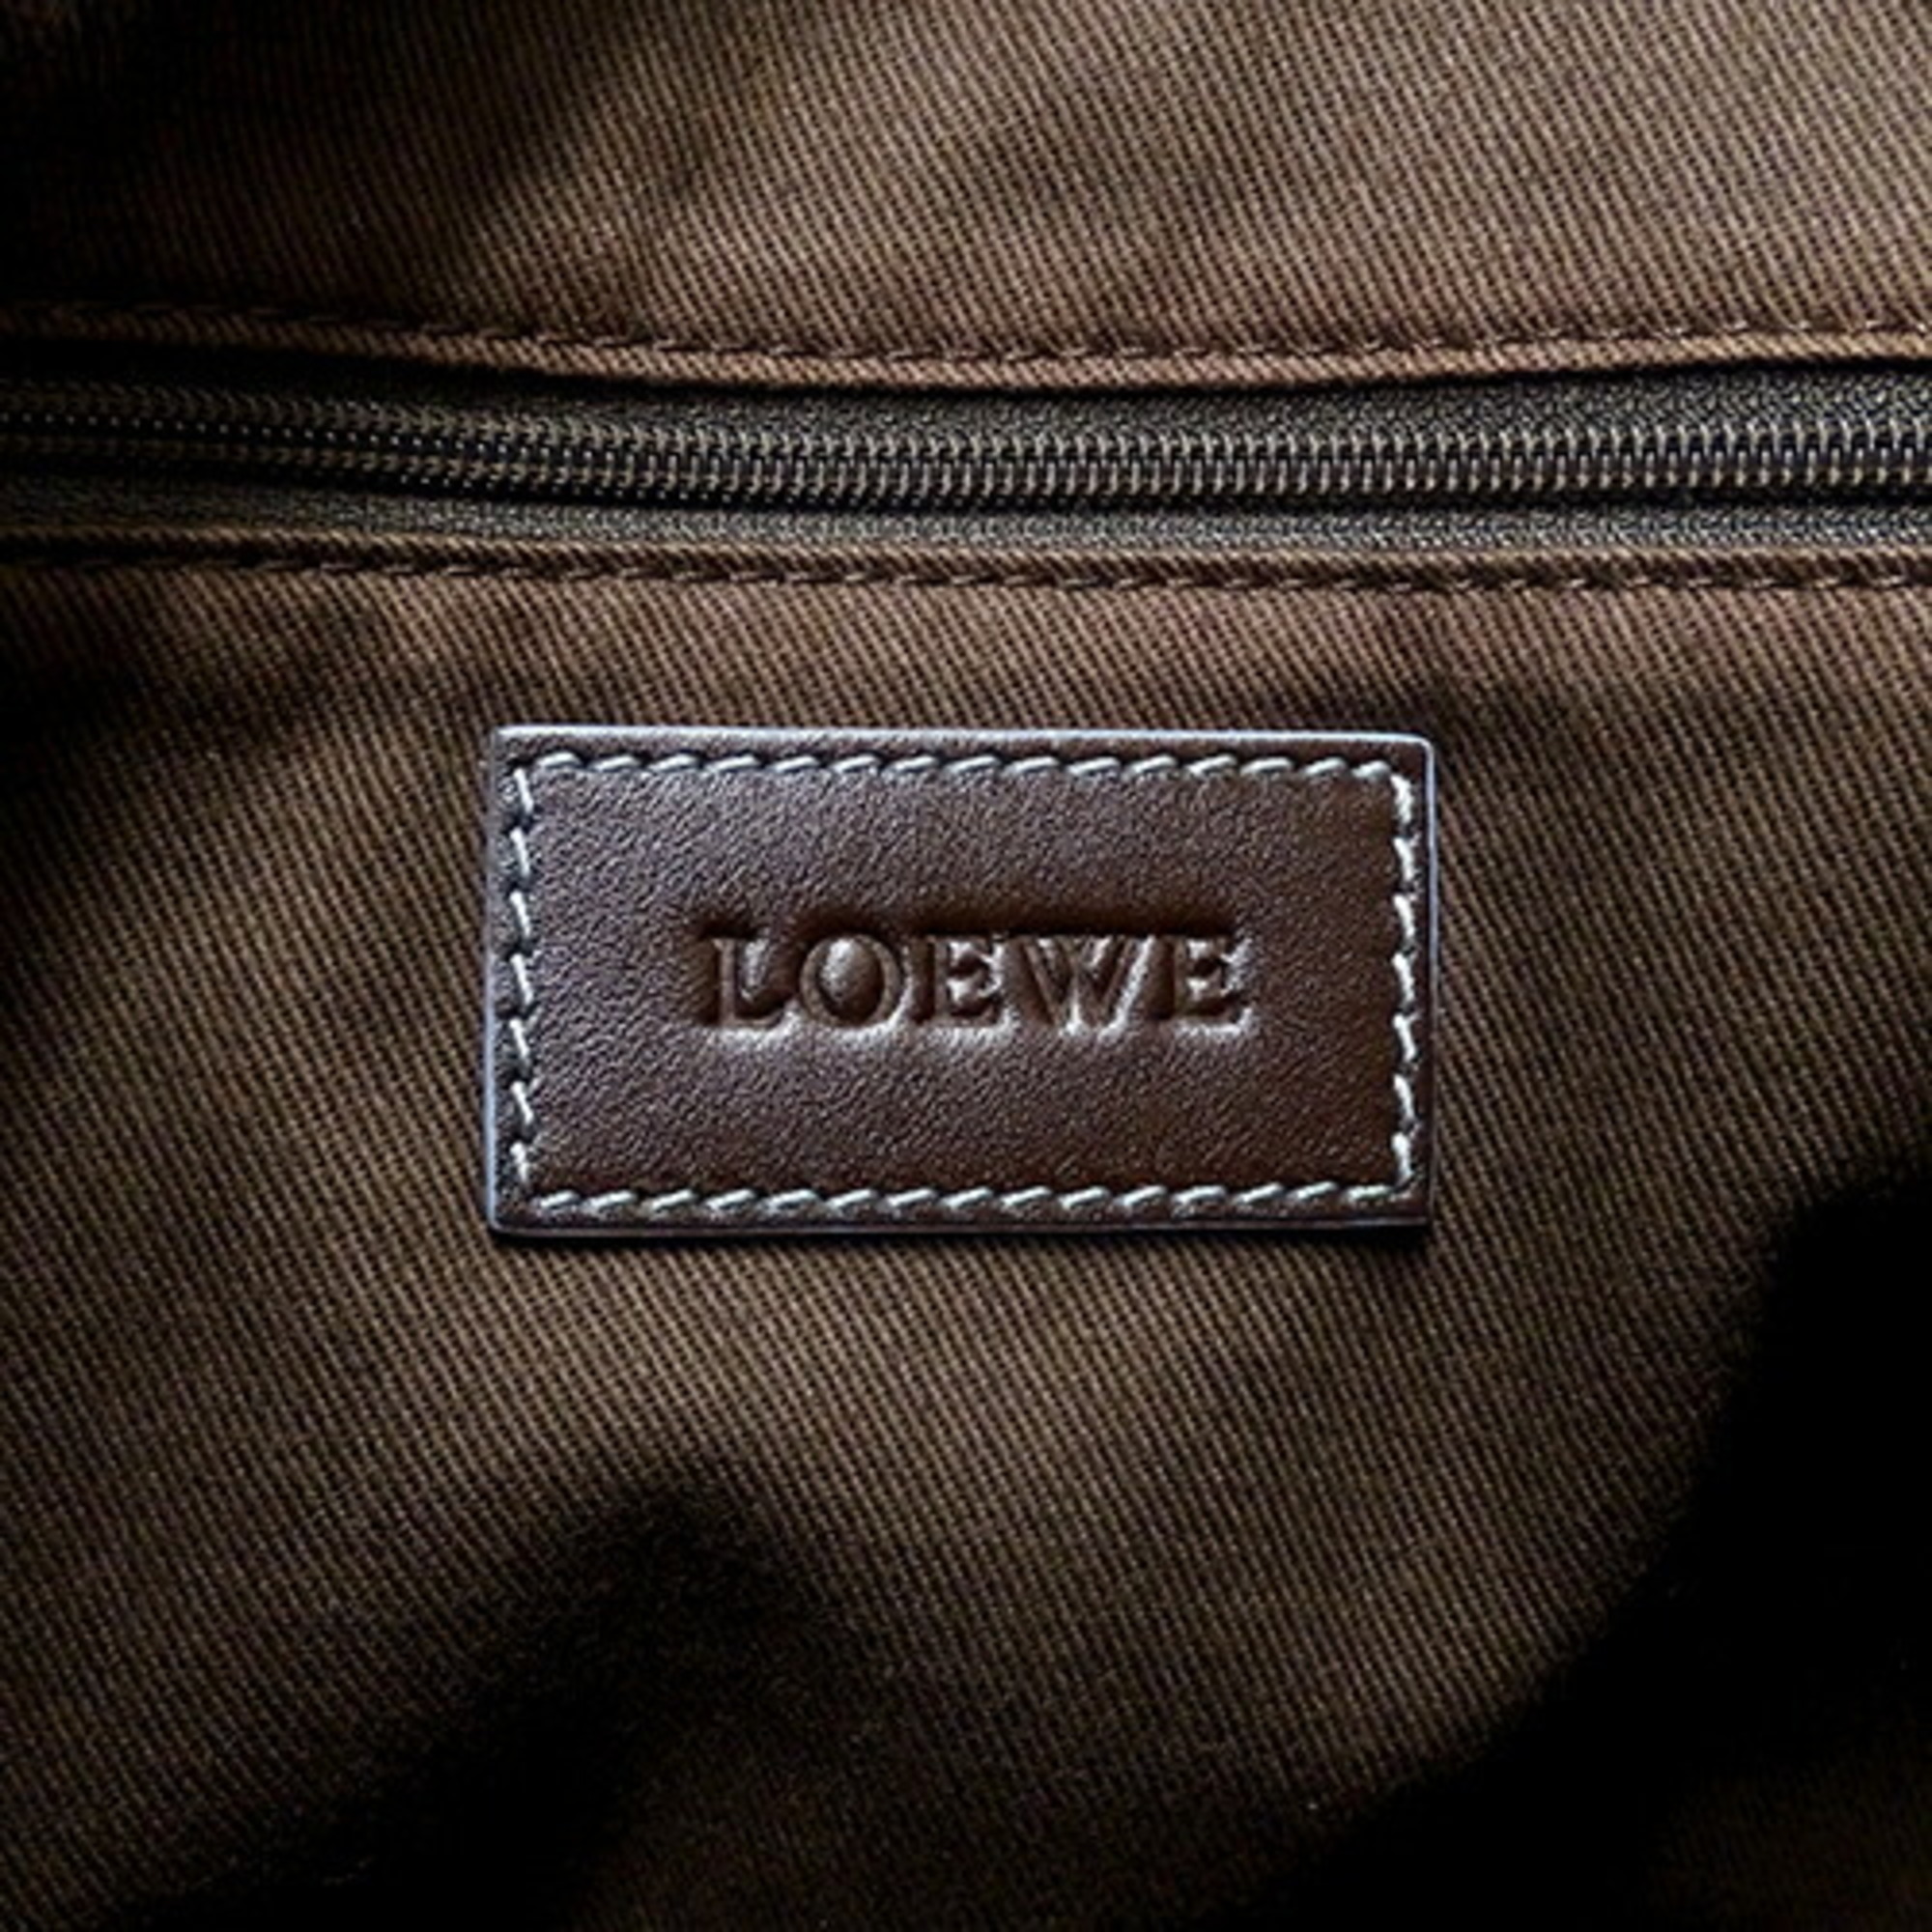 LOEWE Bag Women's Brand Shoulder Repeat Navy Large Capacity Crossbody